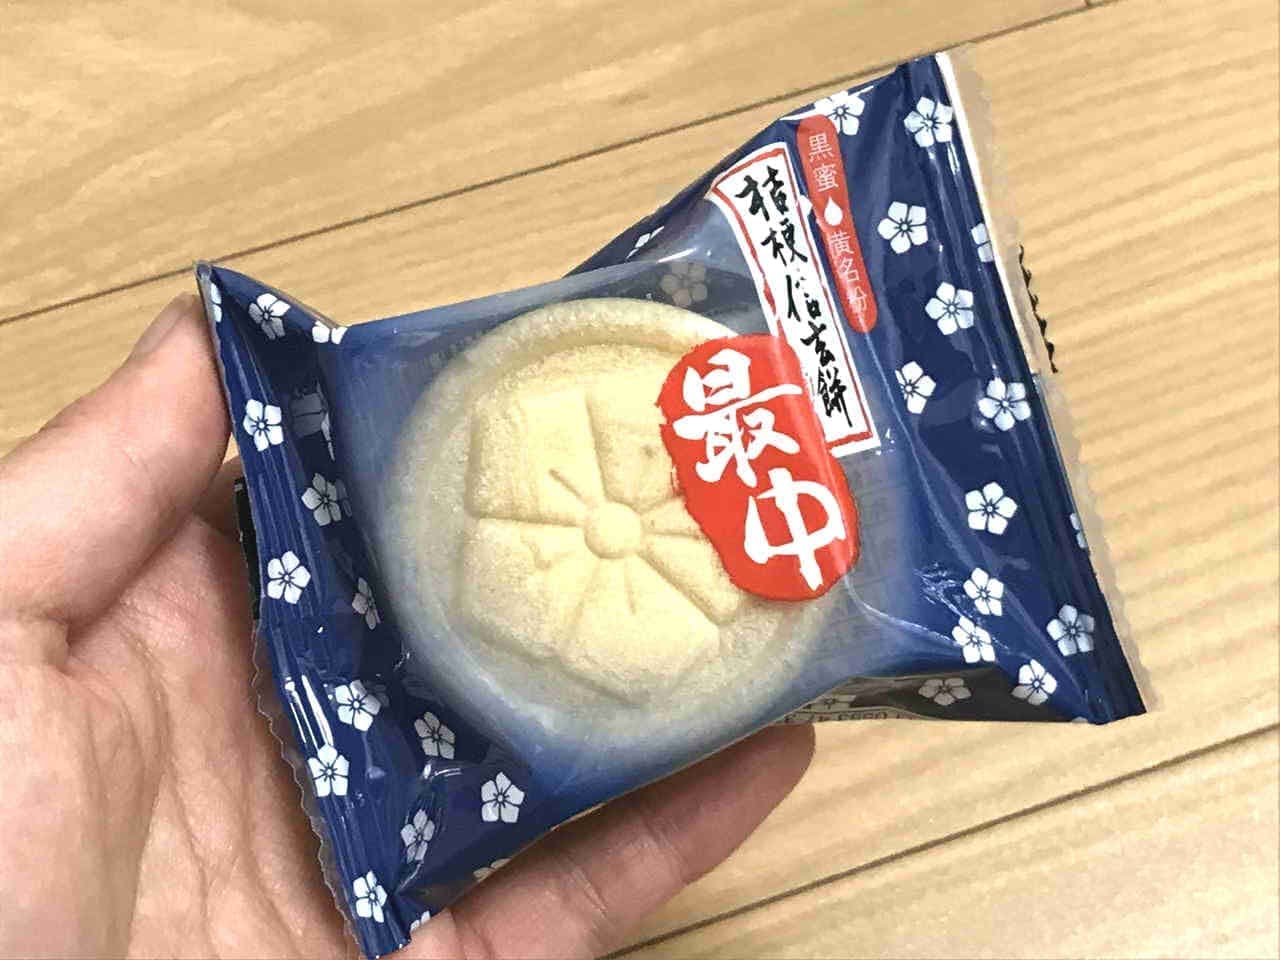 Kikyo Shingen Mochi Fried Bread Manju Monaka Sable Sandwich